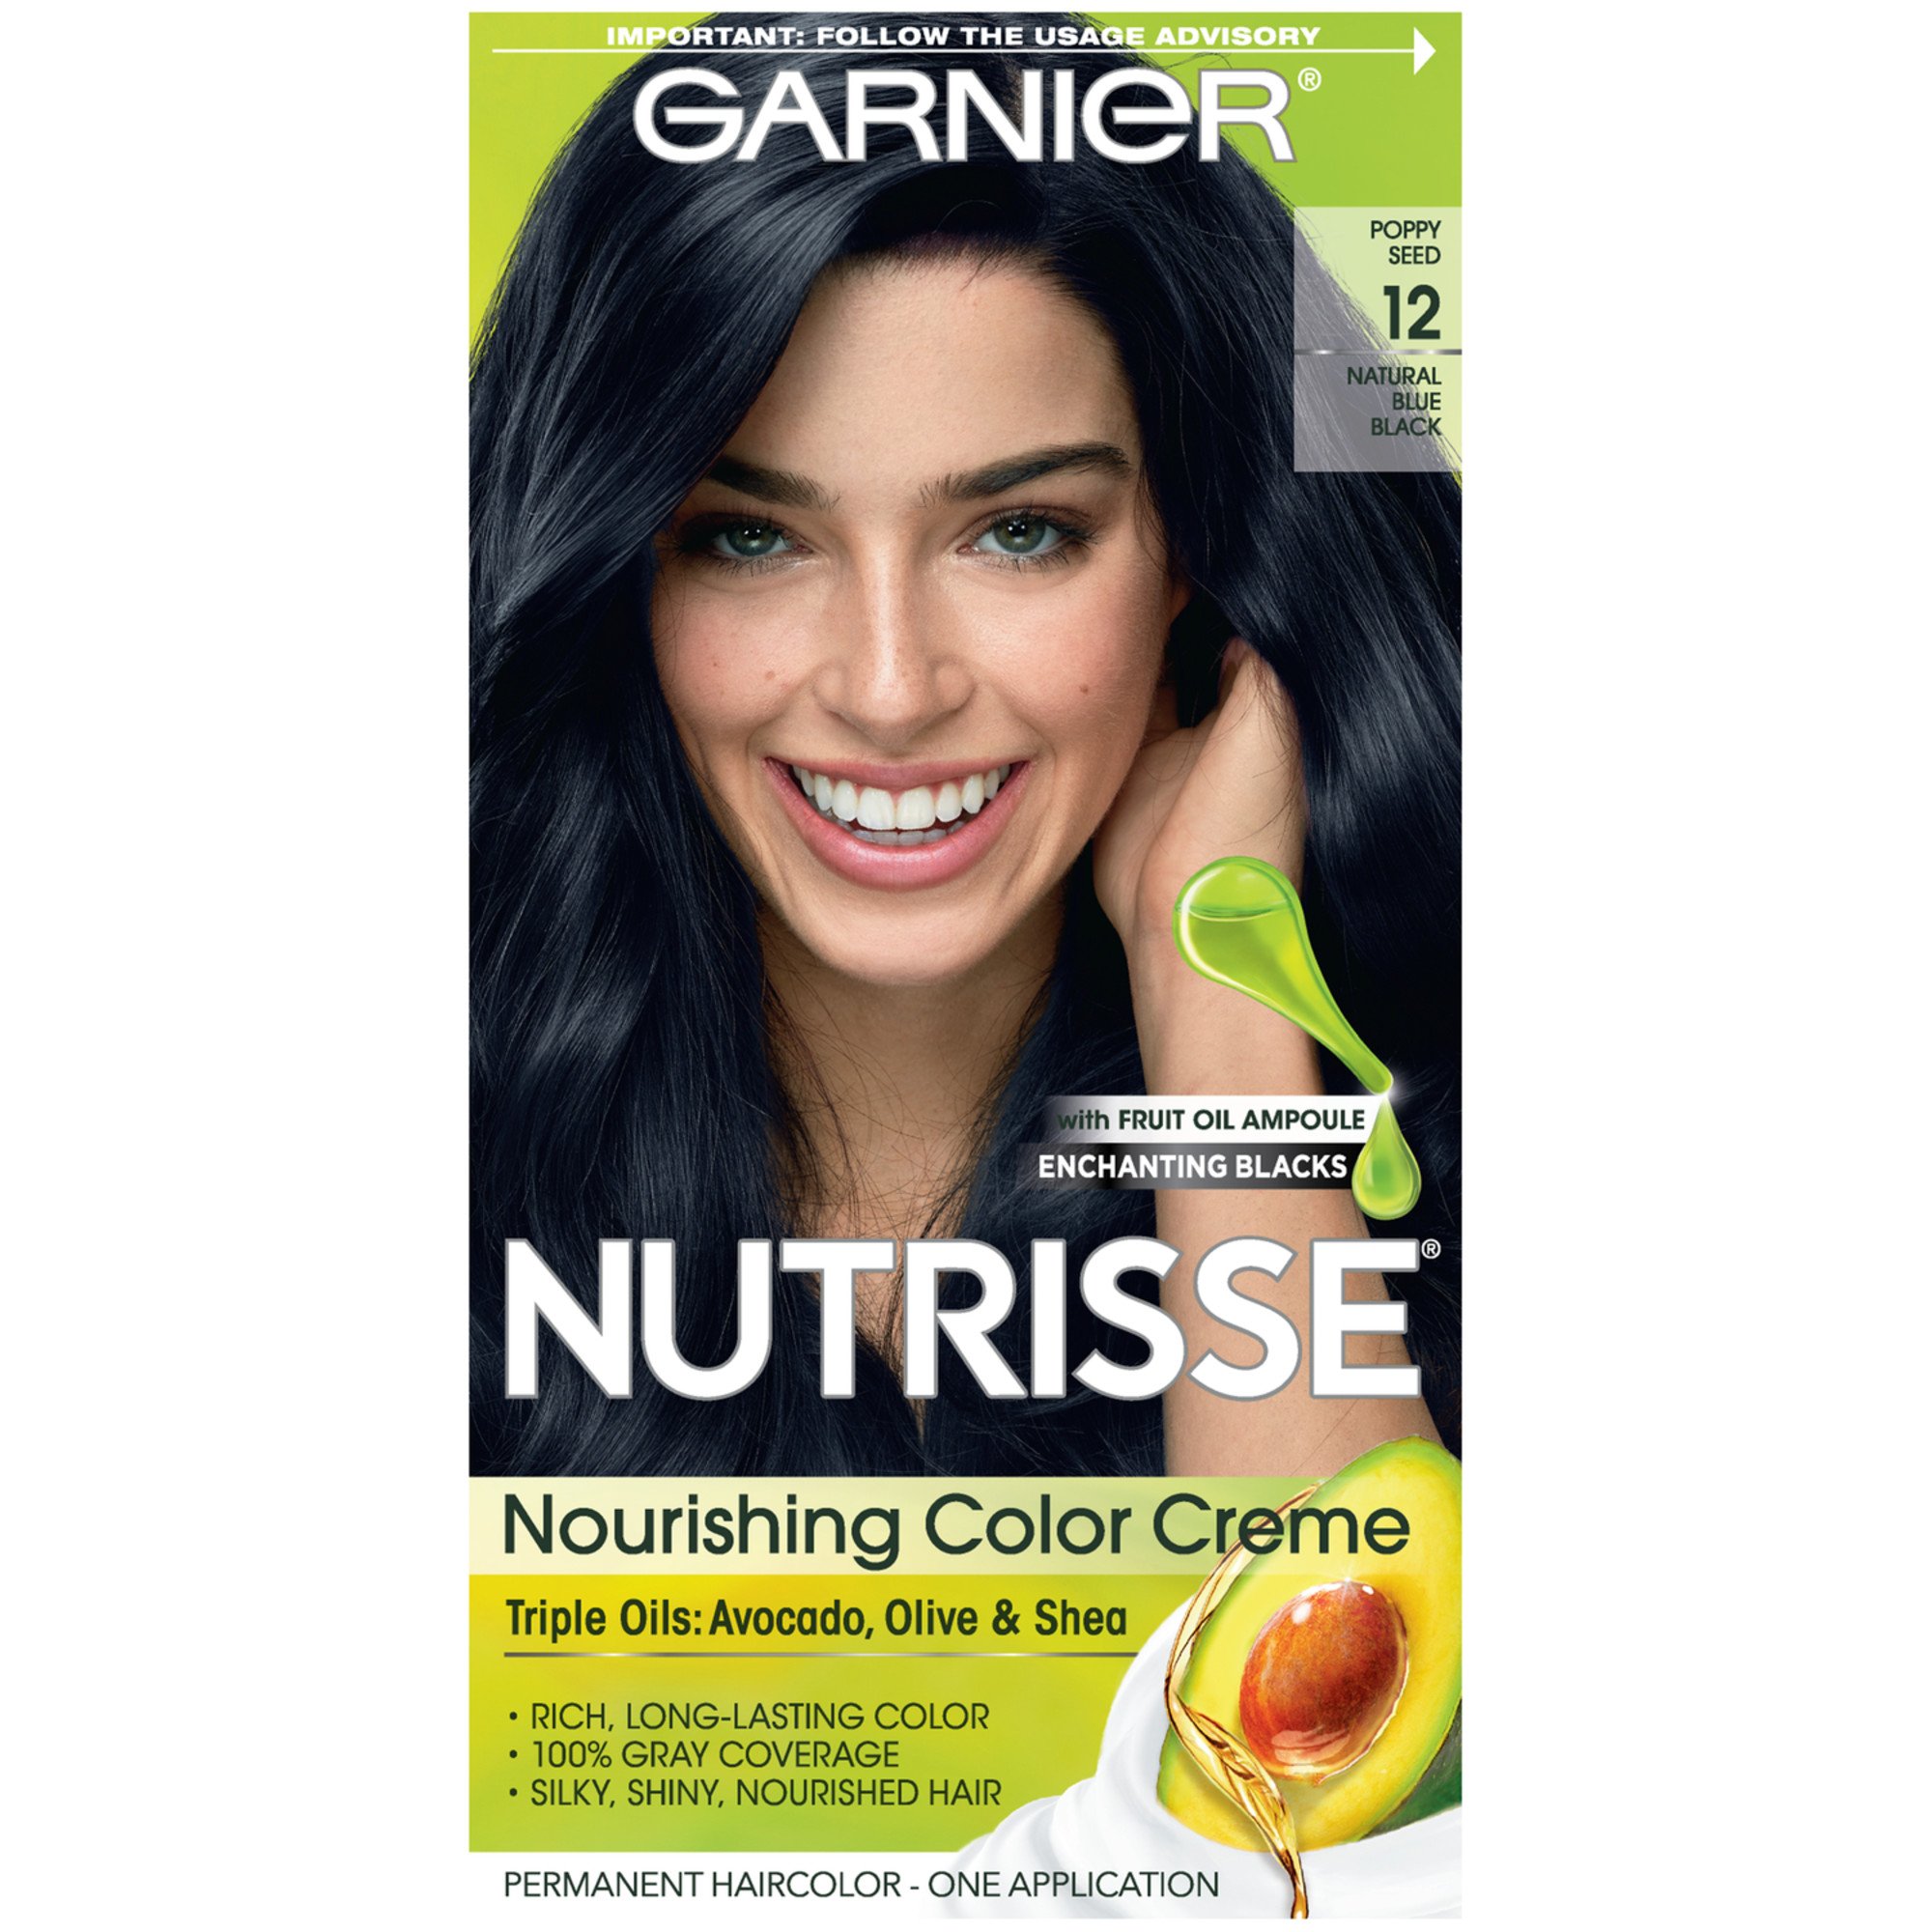 Garnier Nutrisse Nourishing Hair Color Creme with Triple Oils 12 Natural Blue  Black - Shop Hair Care at H-E-B